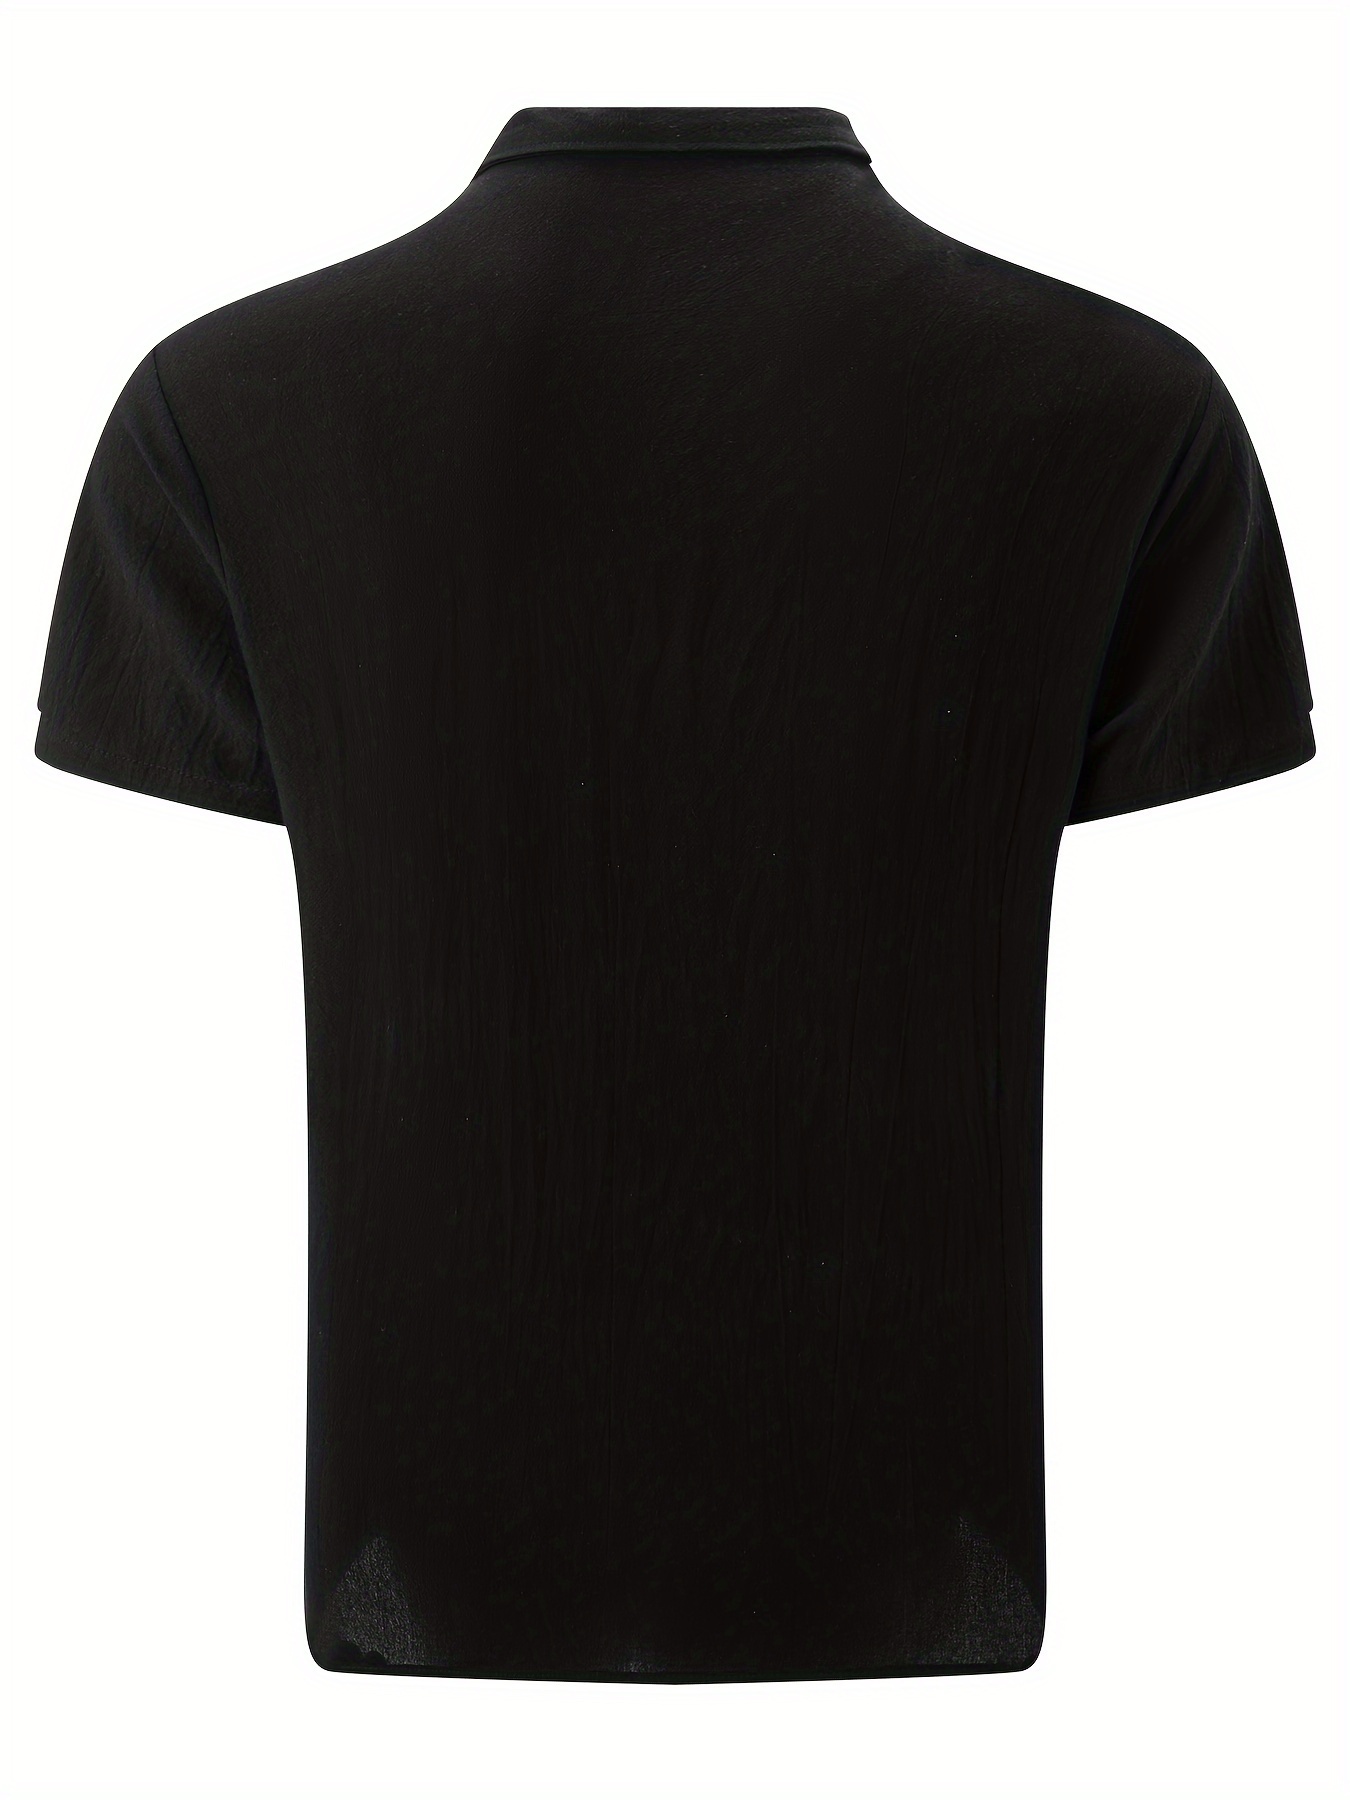 XMMSWDLA Men's Cotton Linen Short Sleeve Shirts Lightweight Casual Button  Down Shirts Summer Beach Spread Collar Tops Black Mens Shirts Casual 